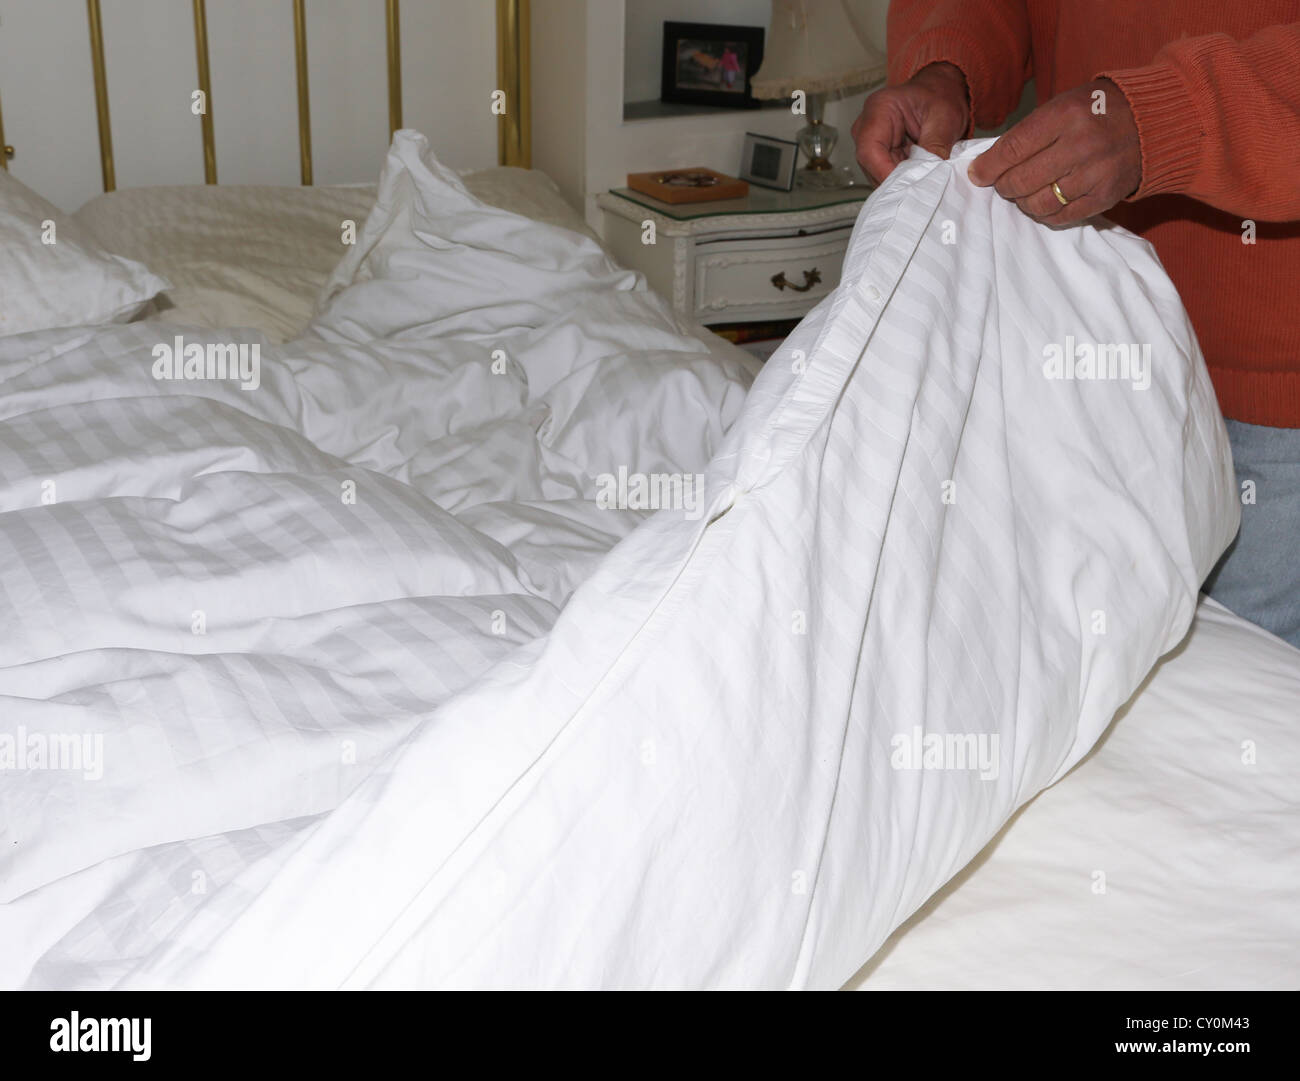 Man ändert das Bett Bettwäsche nehmen der Bettbezug Stockfoto